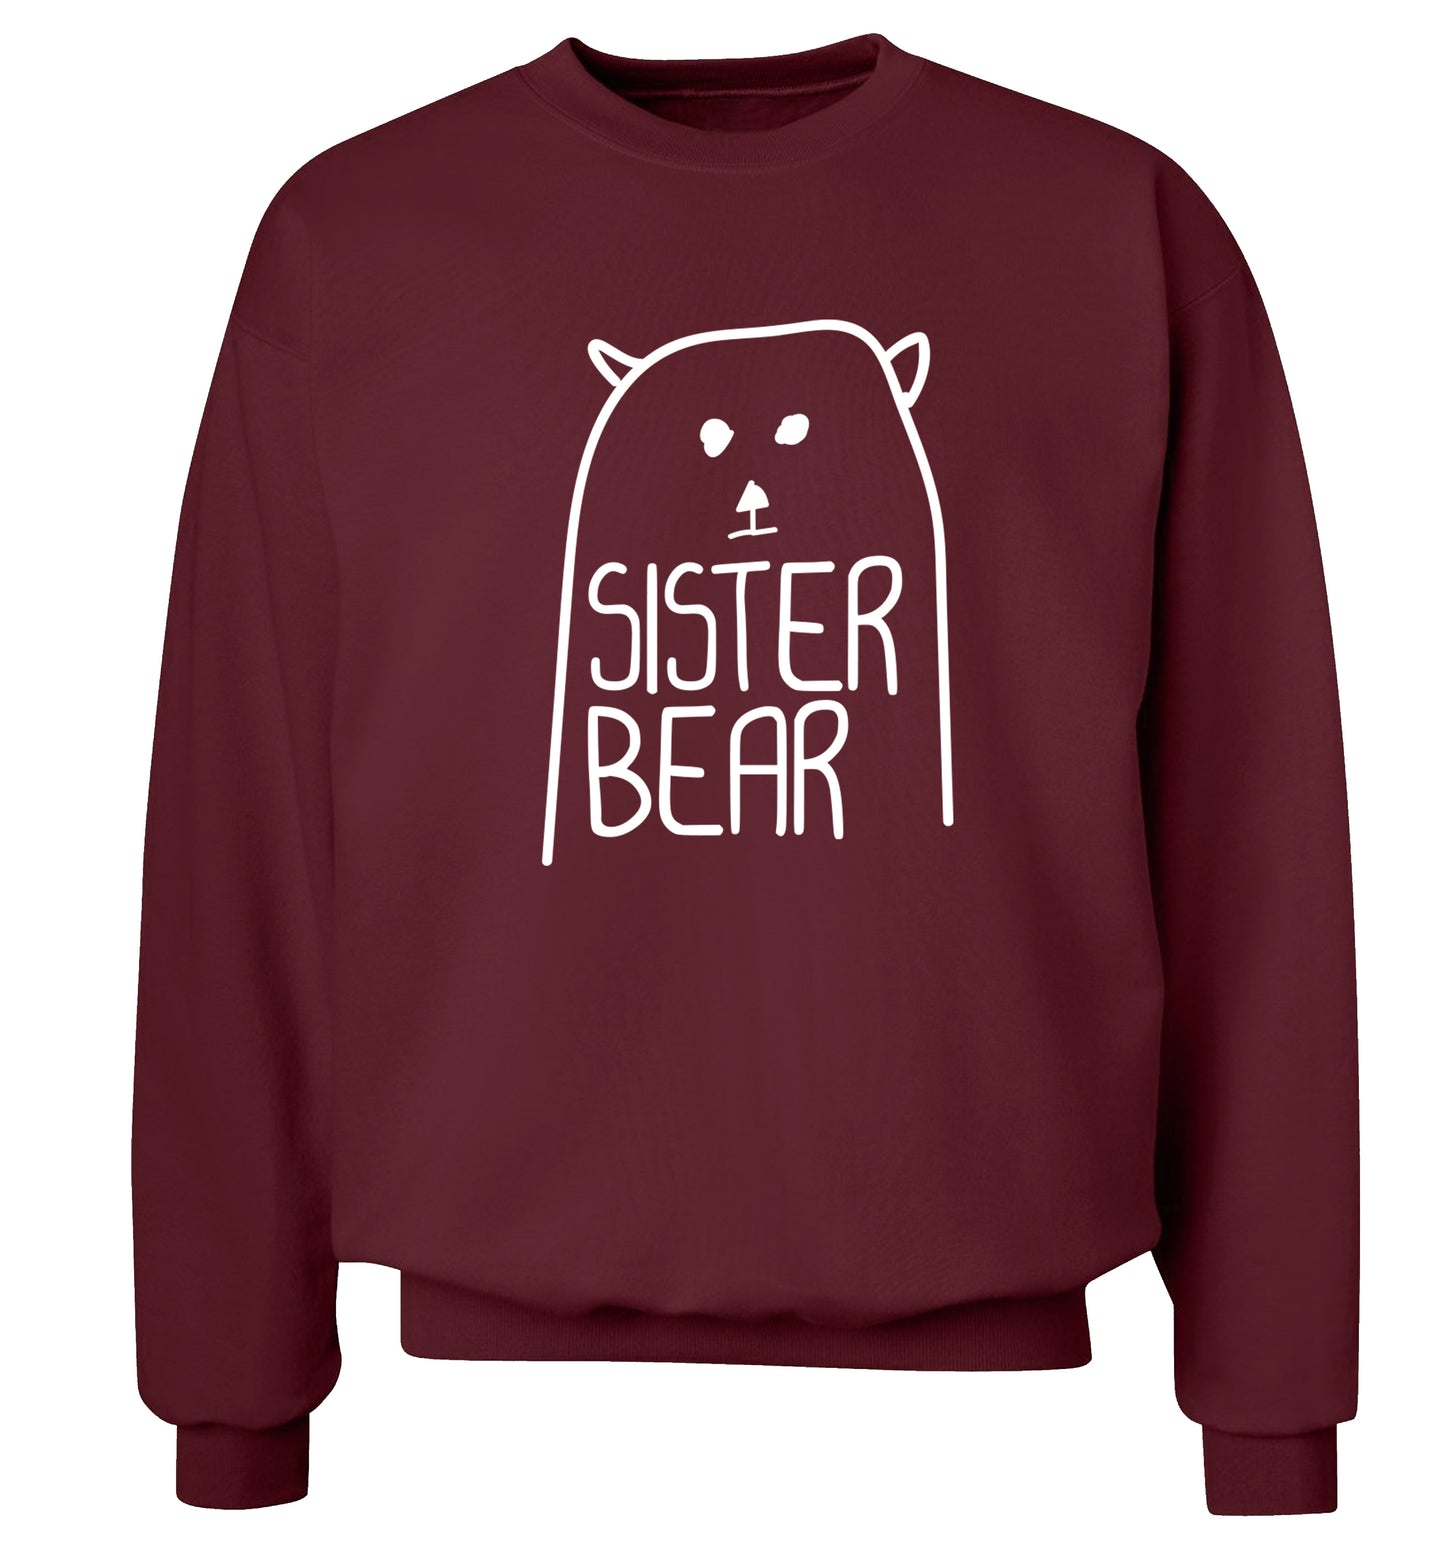 Sister bear Adult's unisex maroon Sweater 2XL